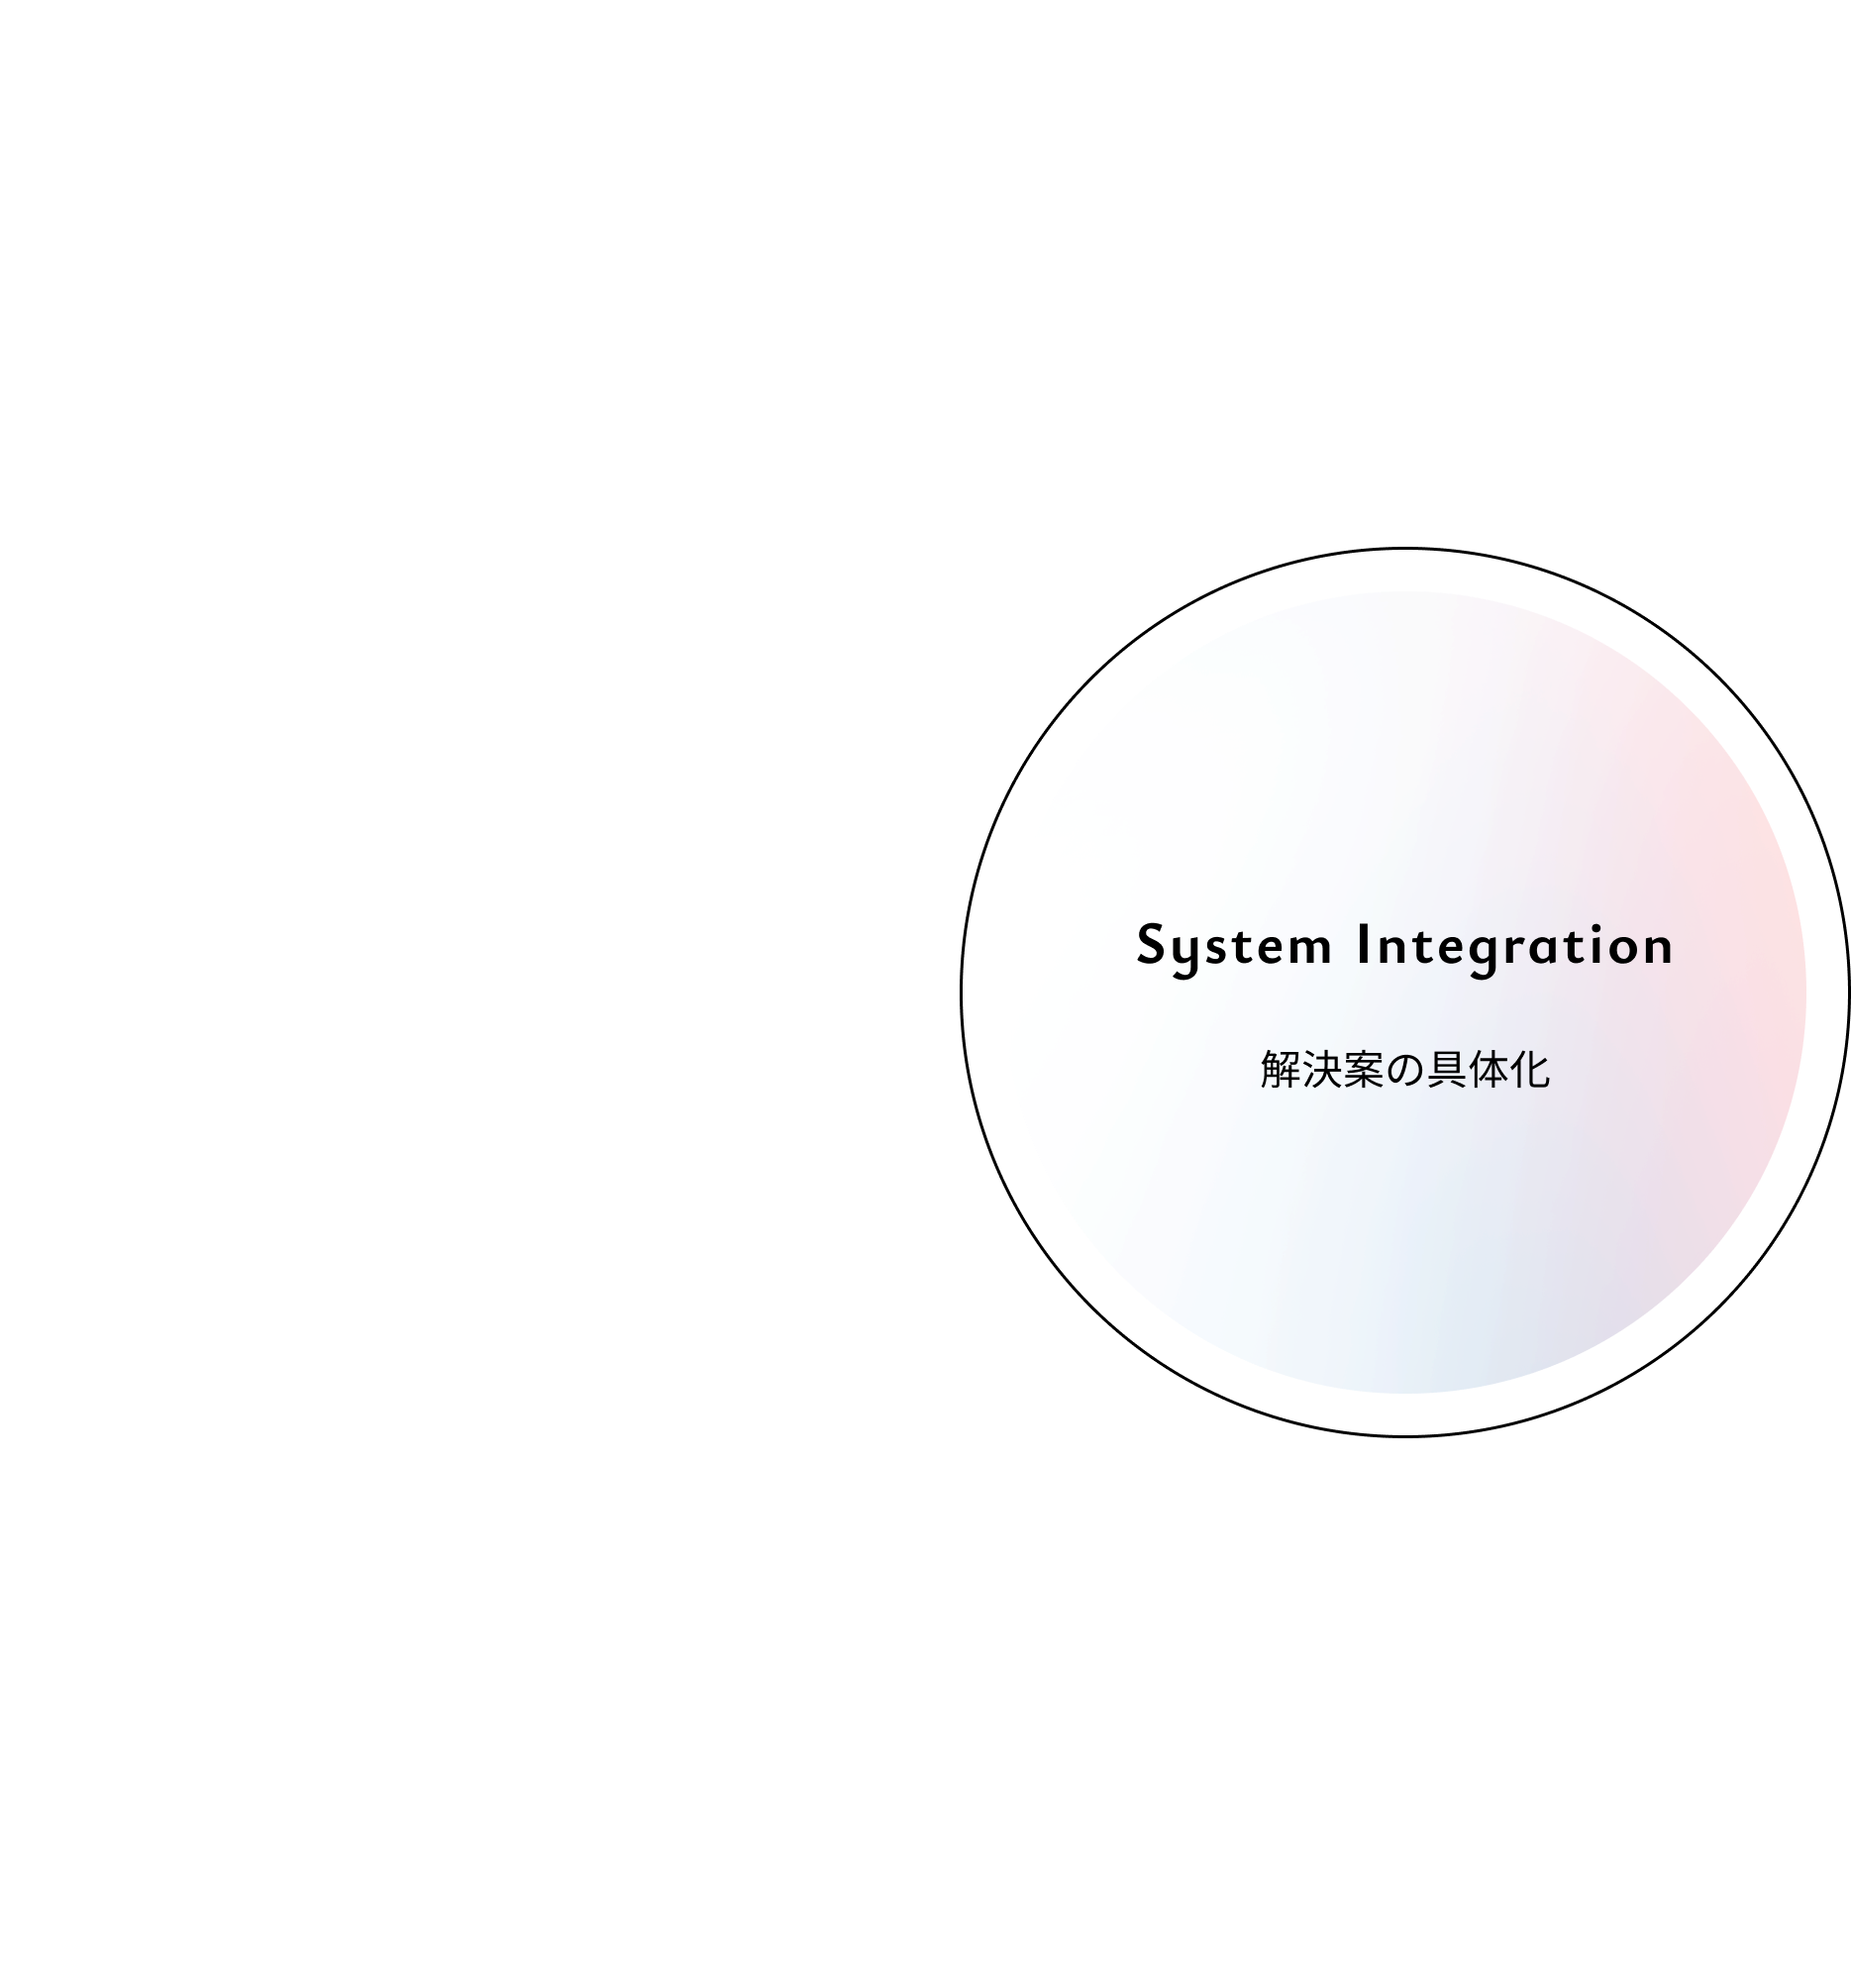 System Integration 解決案の具体化